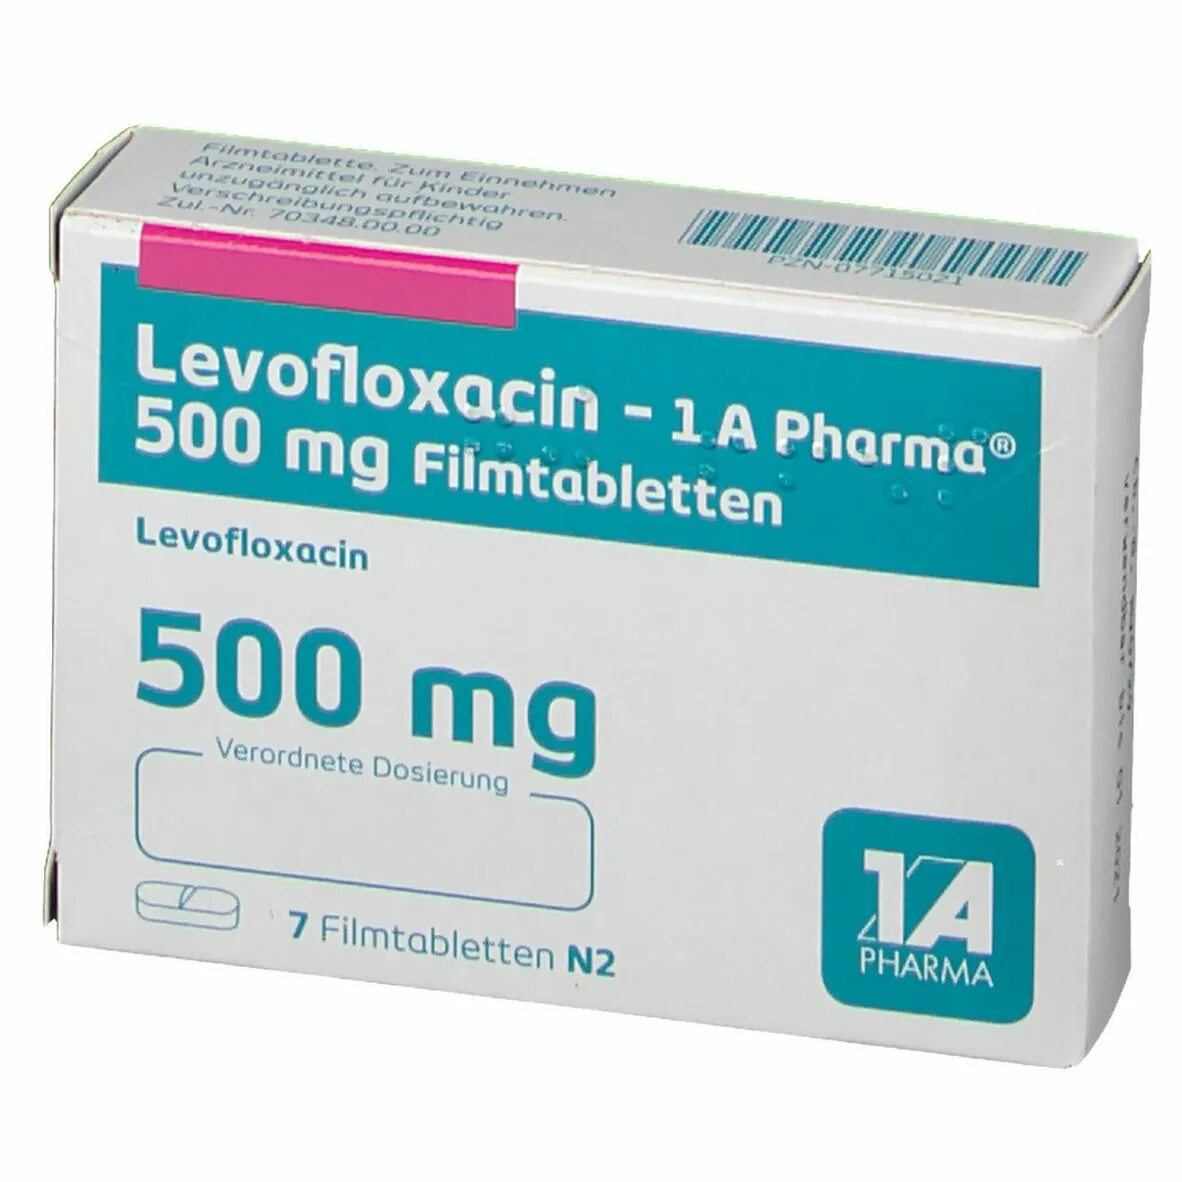 Левофлоксацин 500 мг. 500мг левофлоксацина. Антибиотик Левофлоксацин 500 мг. Clindamycin 600.